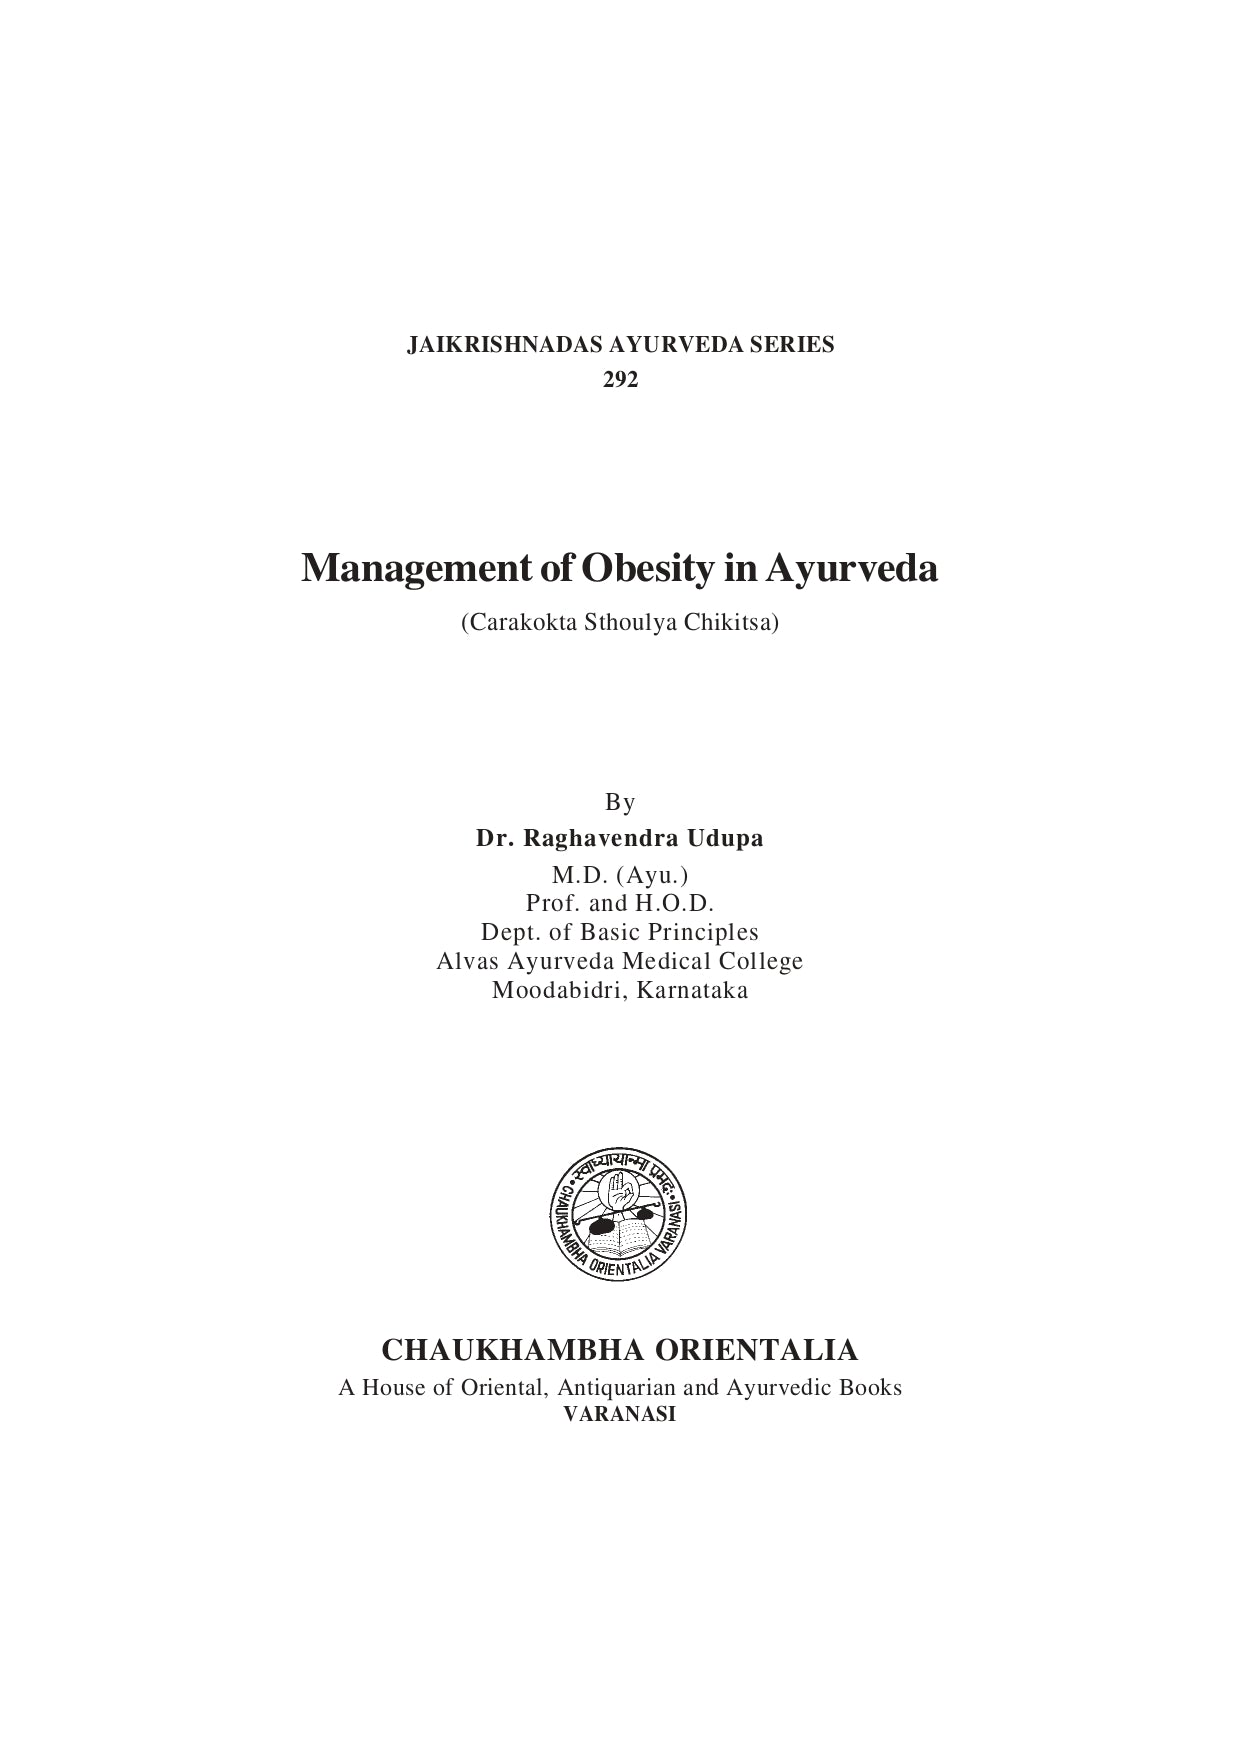 Chaukhambha Orientalia Management of Obesity in Ayurveda